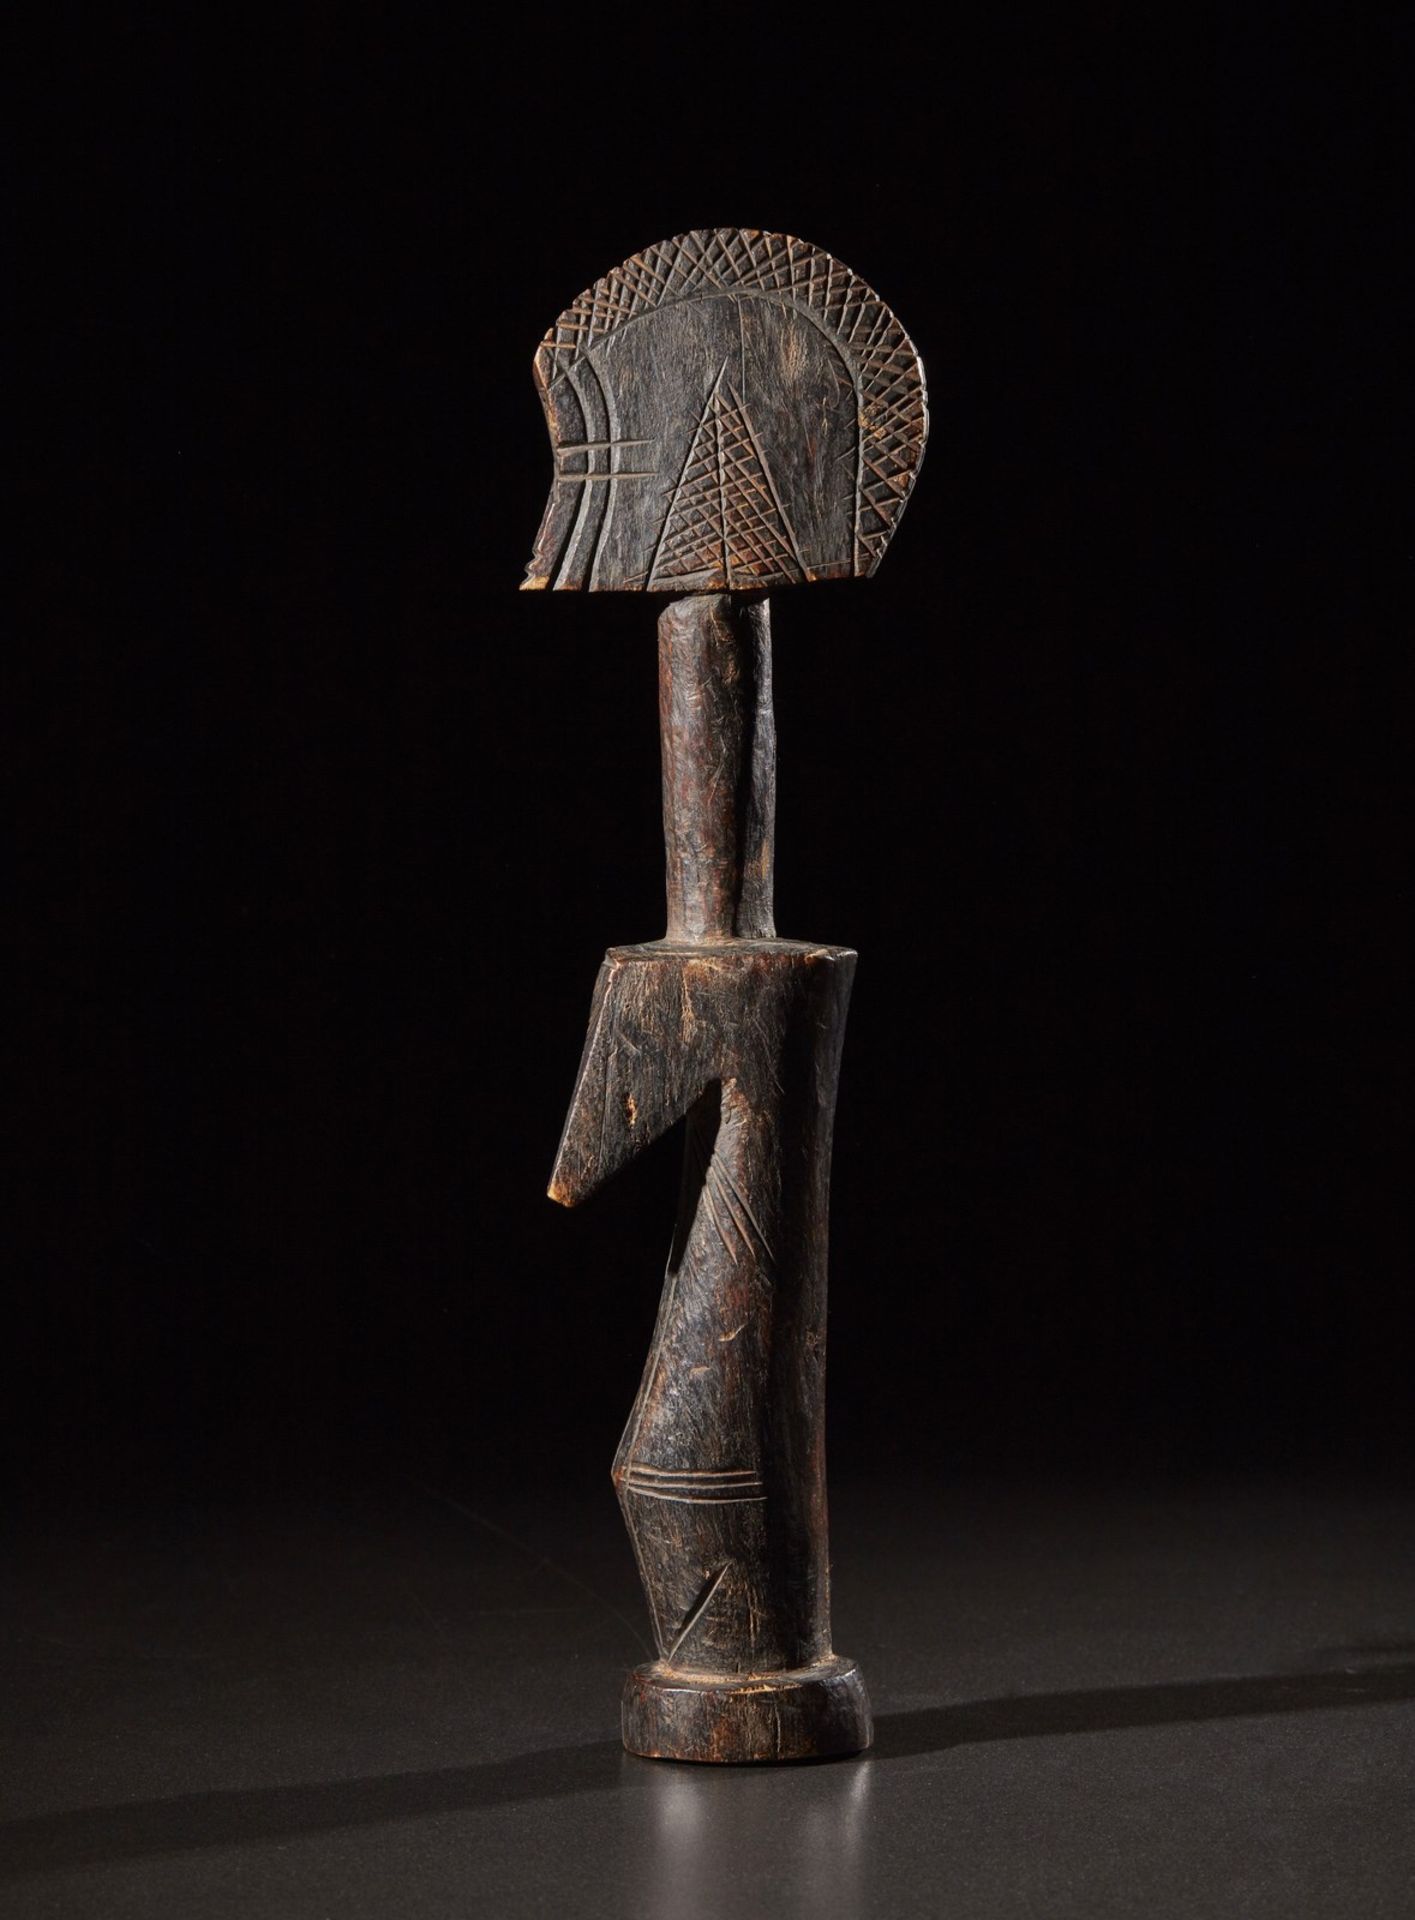 Mossi - Burkina Faso Fertility doll.Hardwood with dark patina.Signs of use. - Image 2 of 4